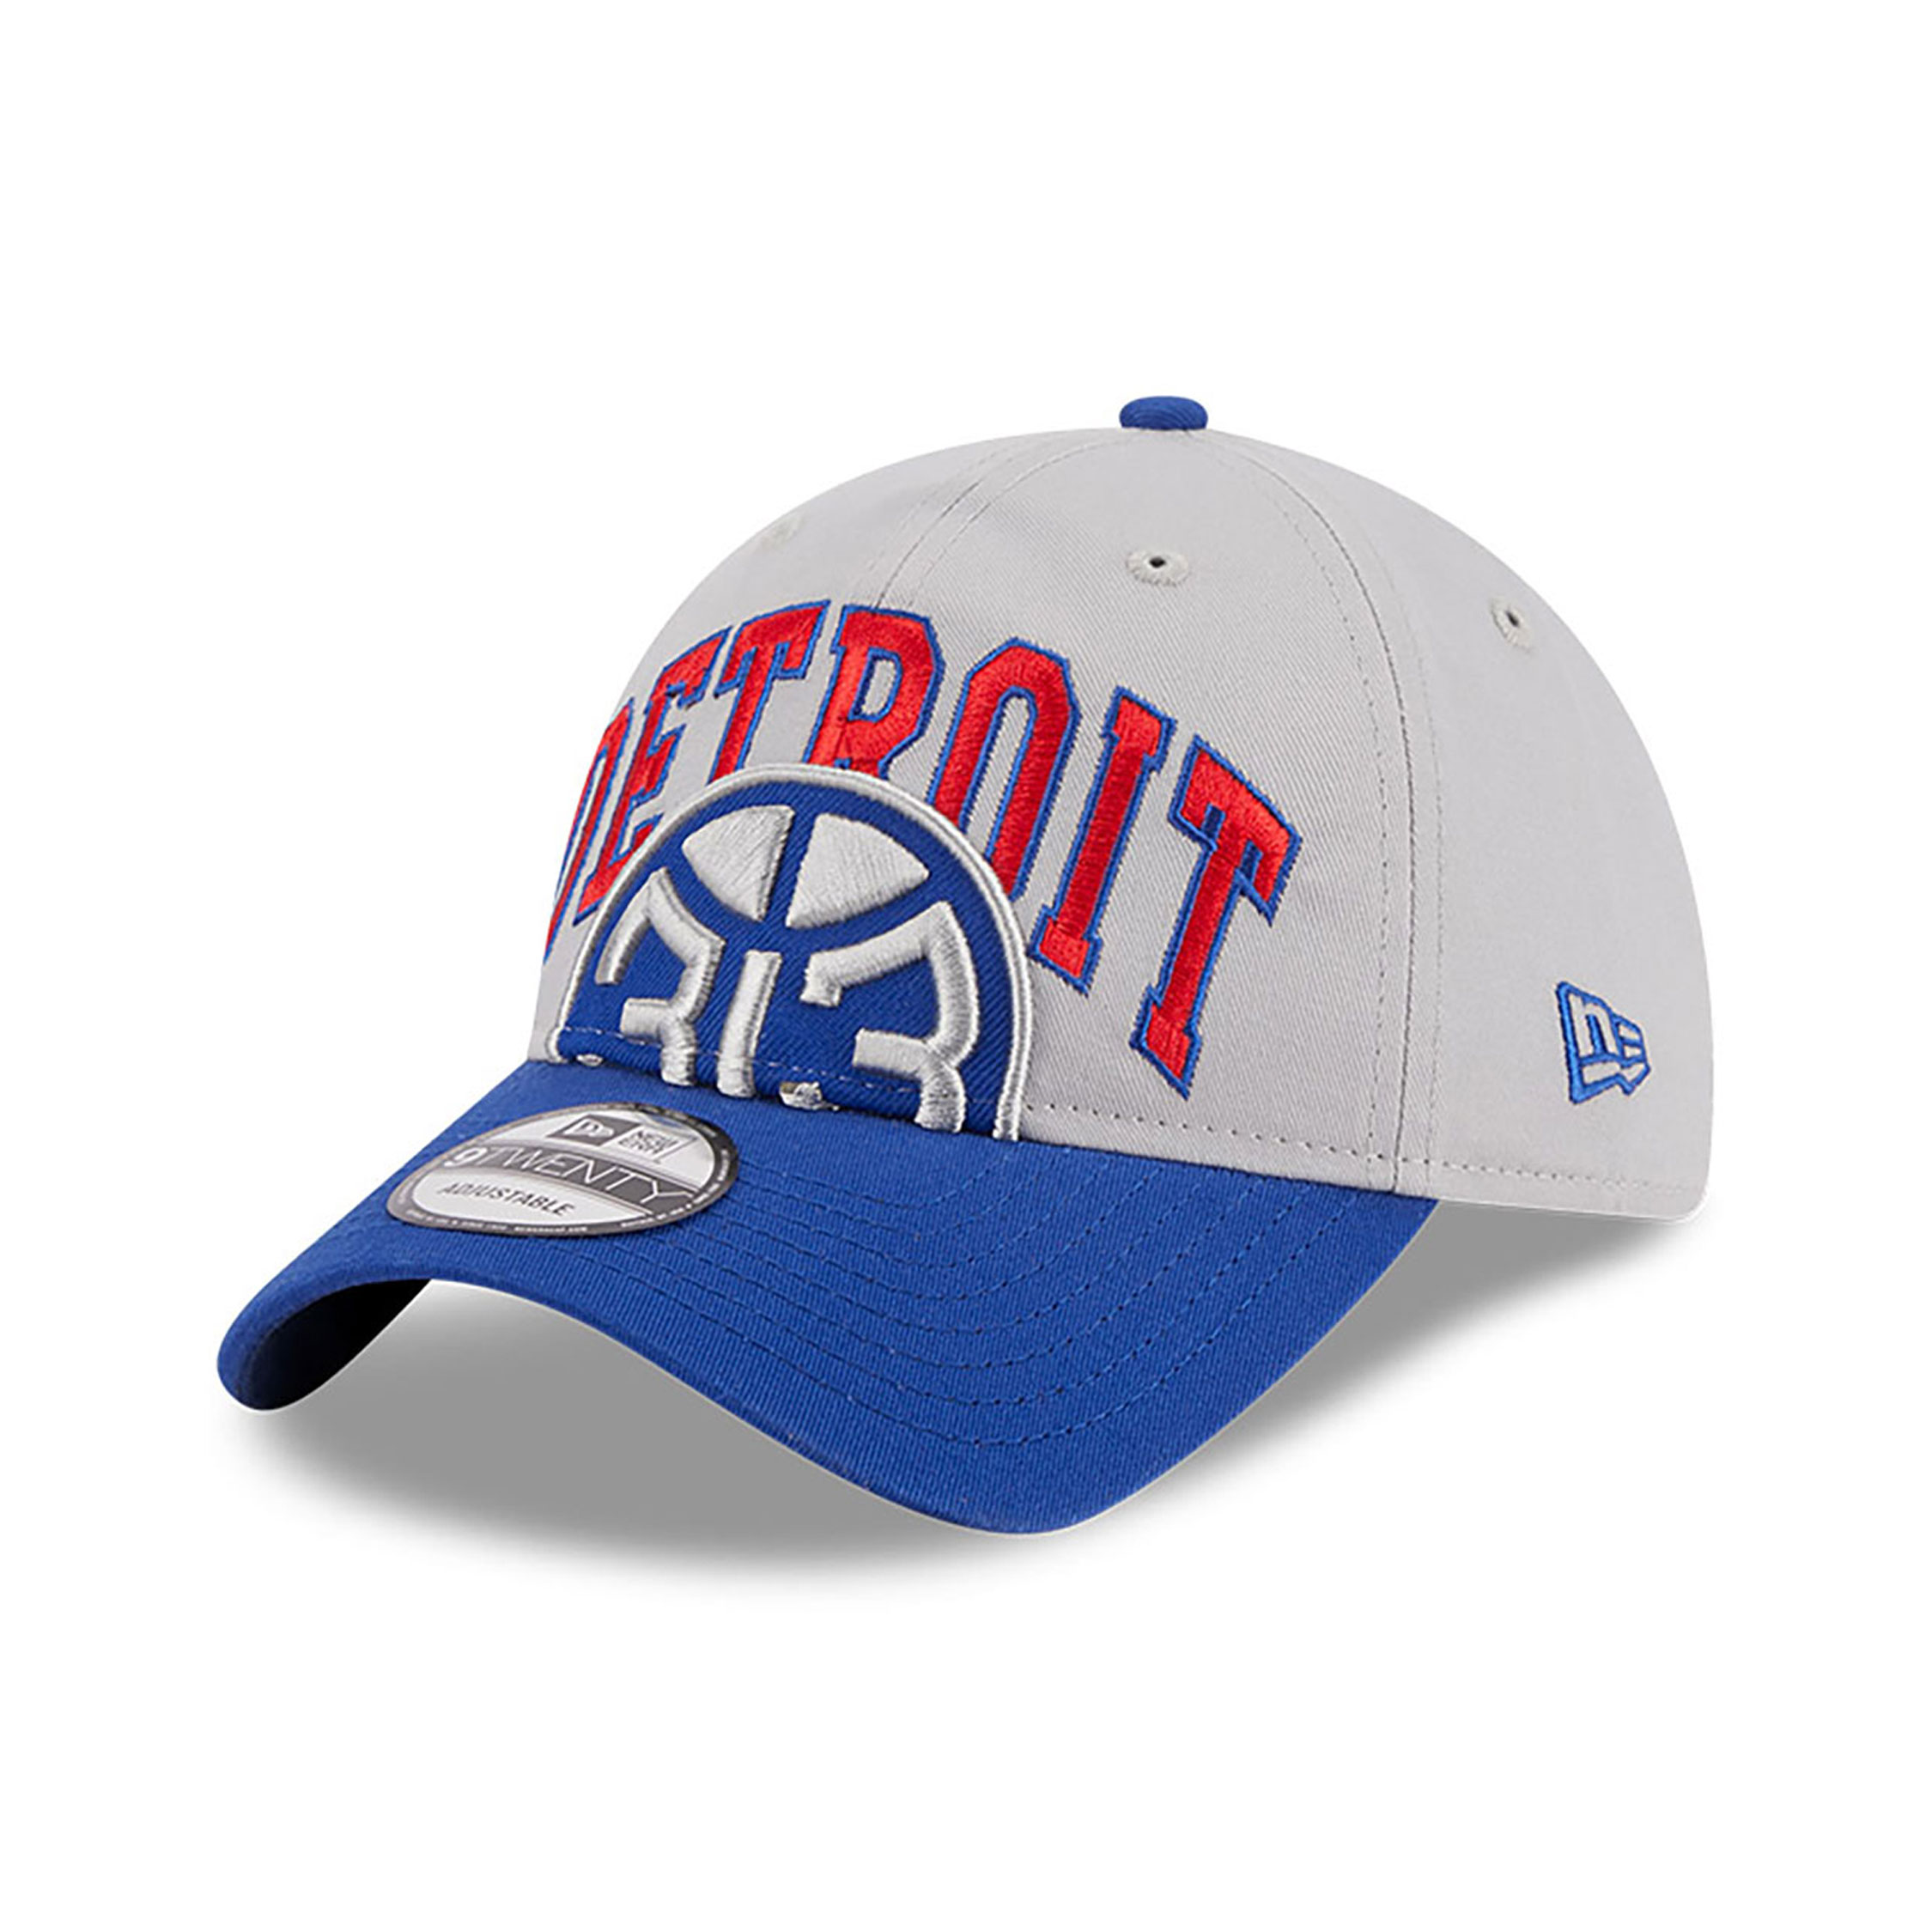 New Era NBA Detroit Pistons Snapback Hat Cap Blue Red Leather